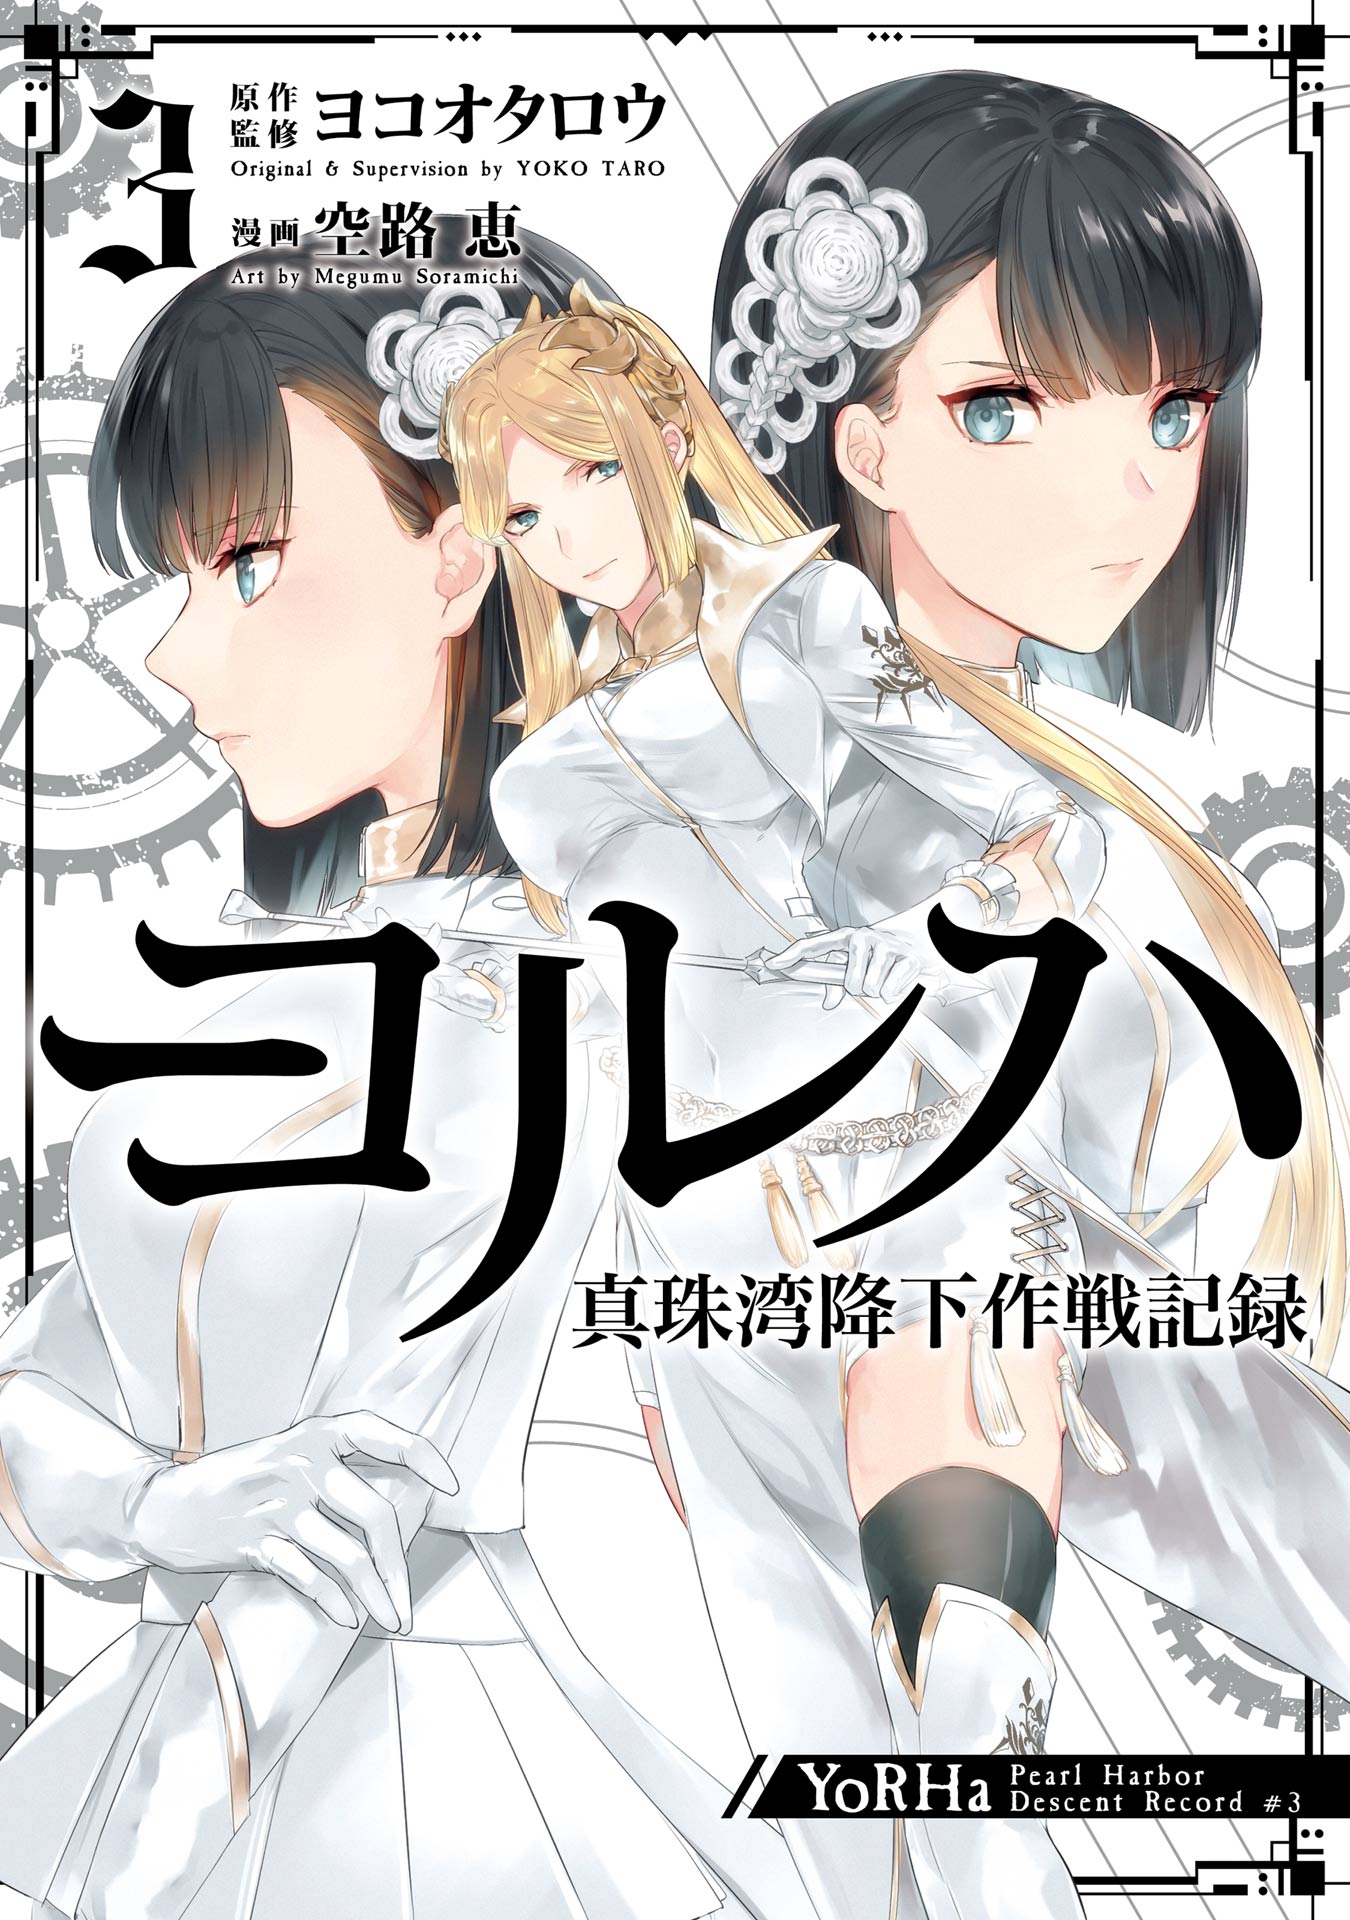 YoRHa Shinjuwan Kouka Sakusen Kiroku Manga Cover Volume 3